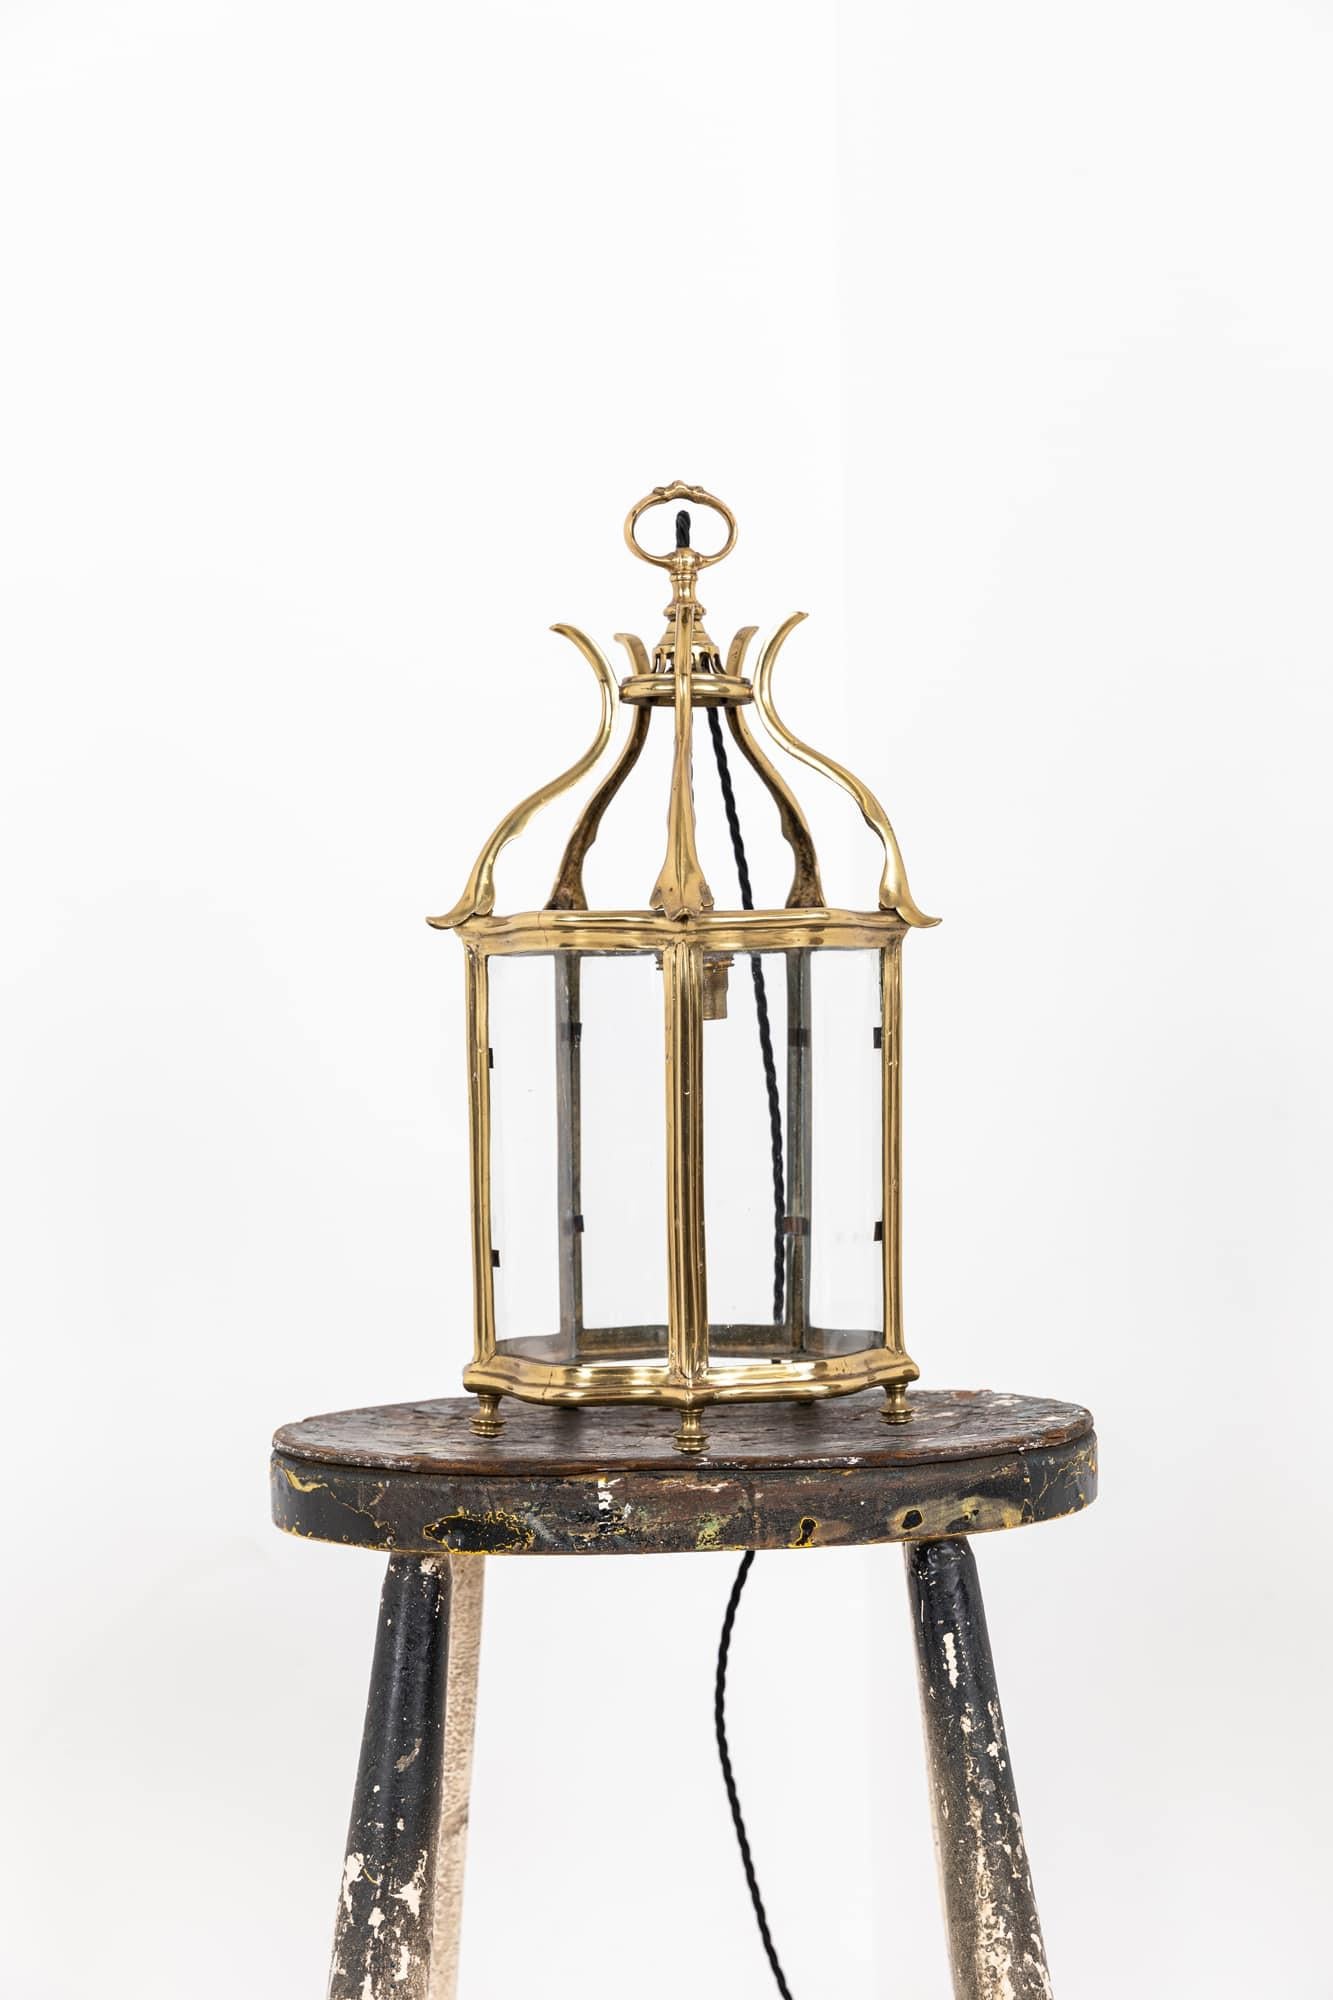 Glass Antique Faraday & Sons Glazed Brass Porch Lantern Light Lamp. C.1910